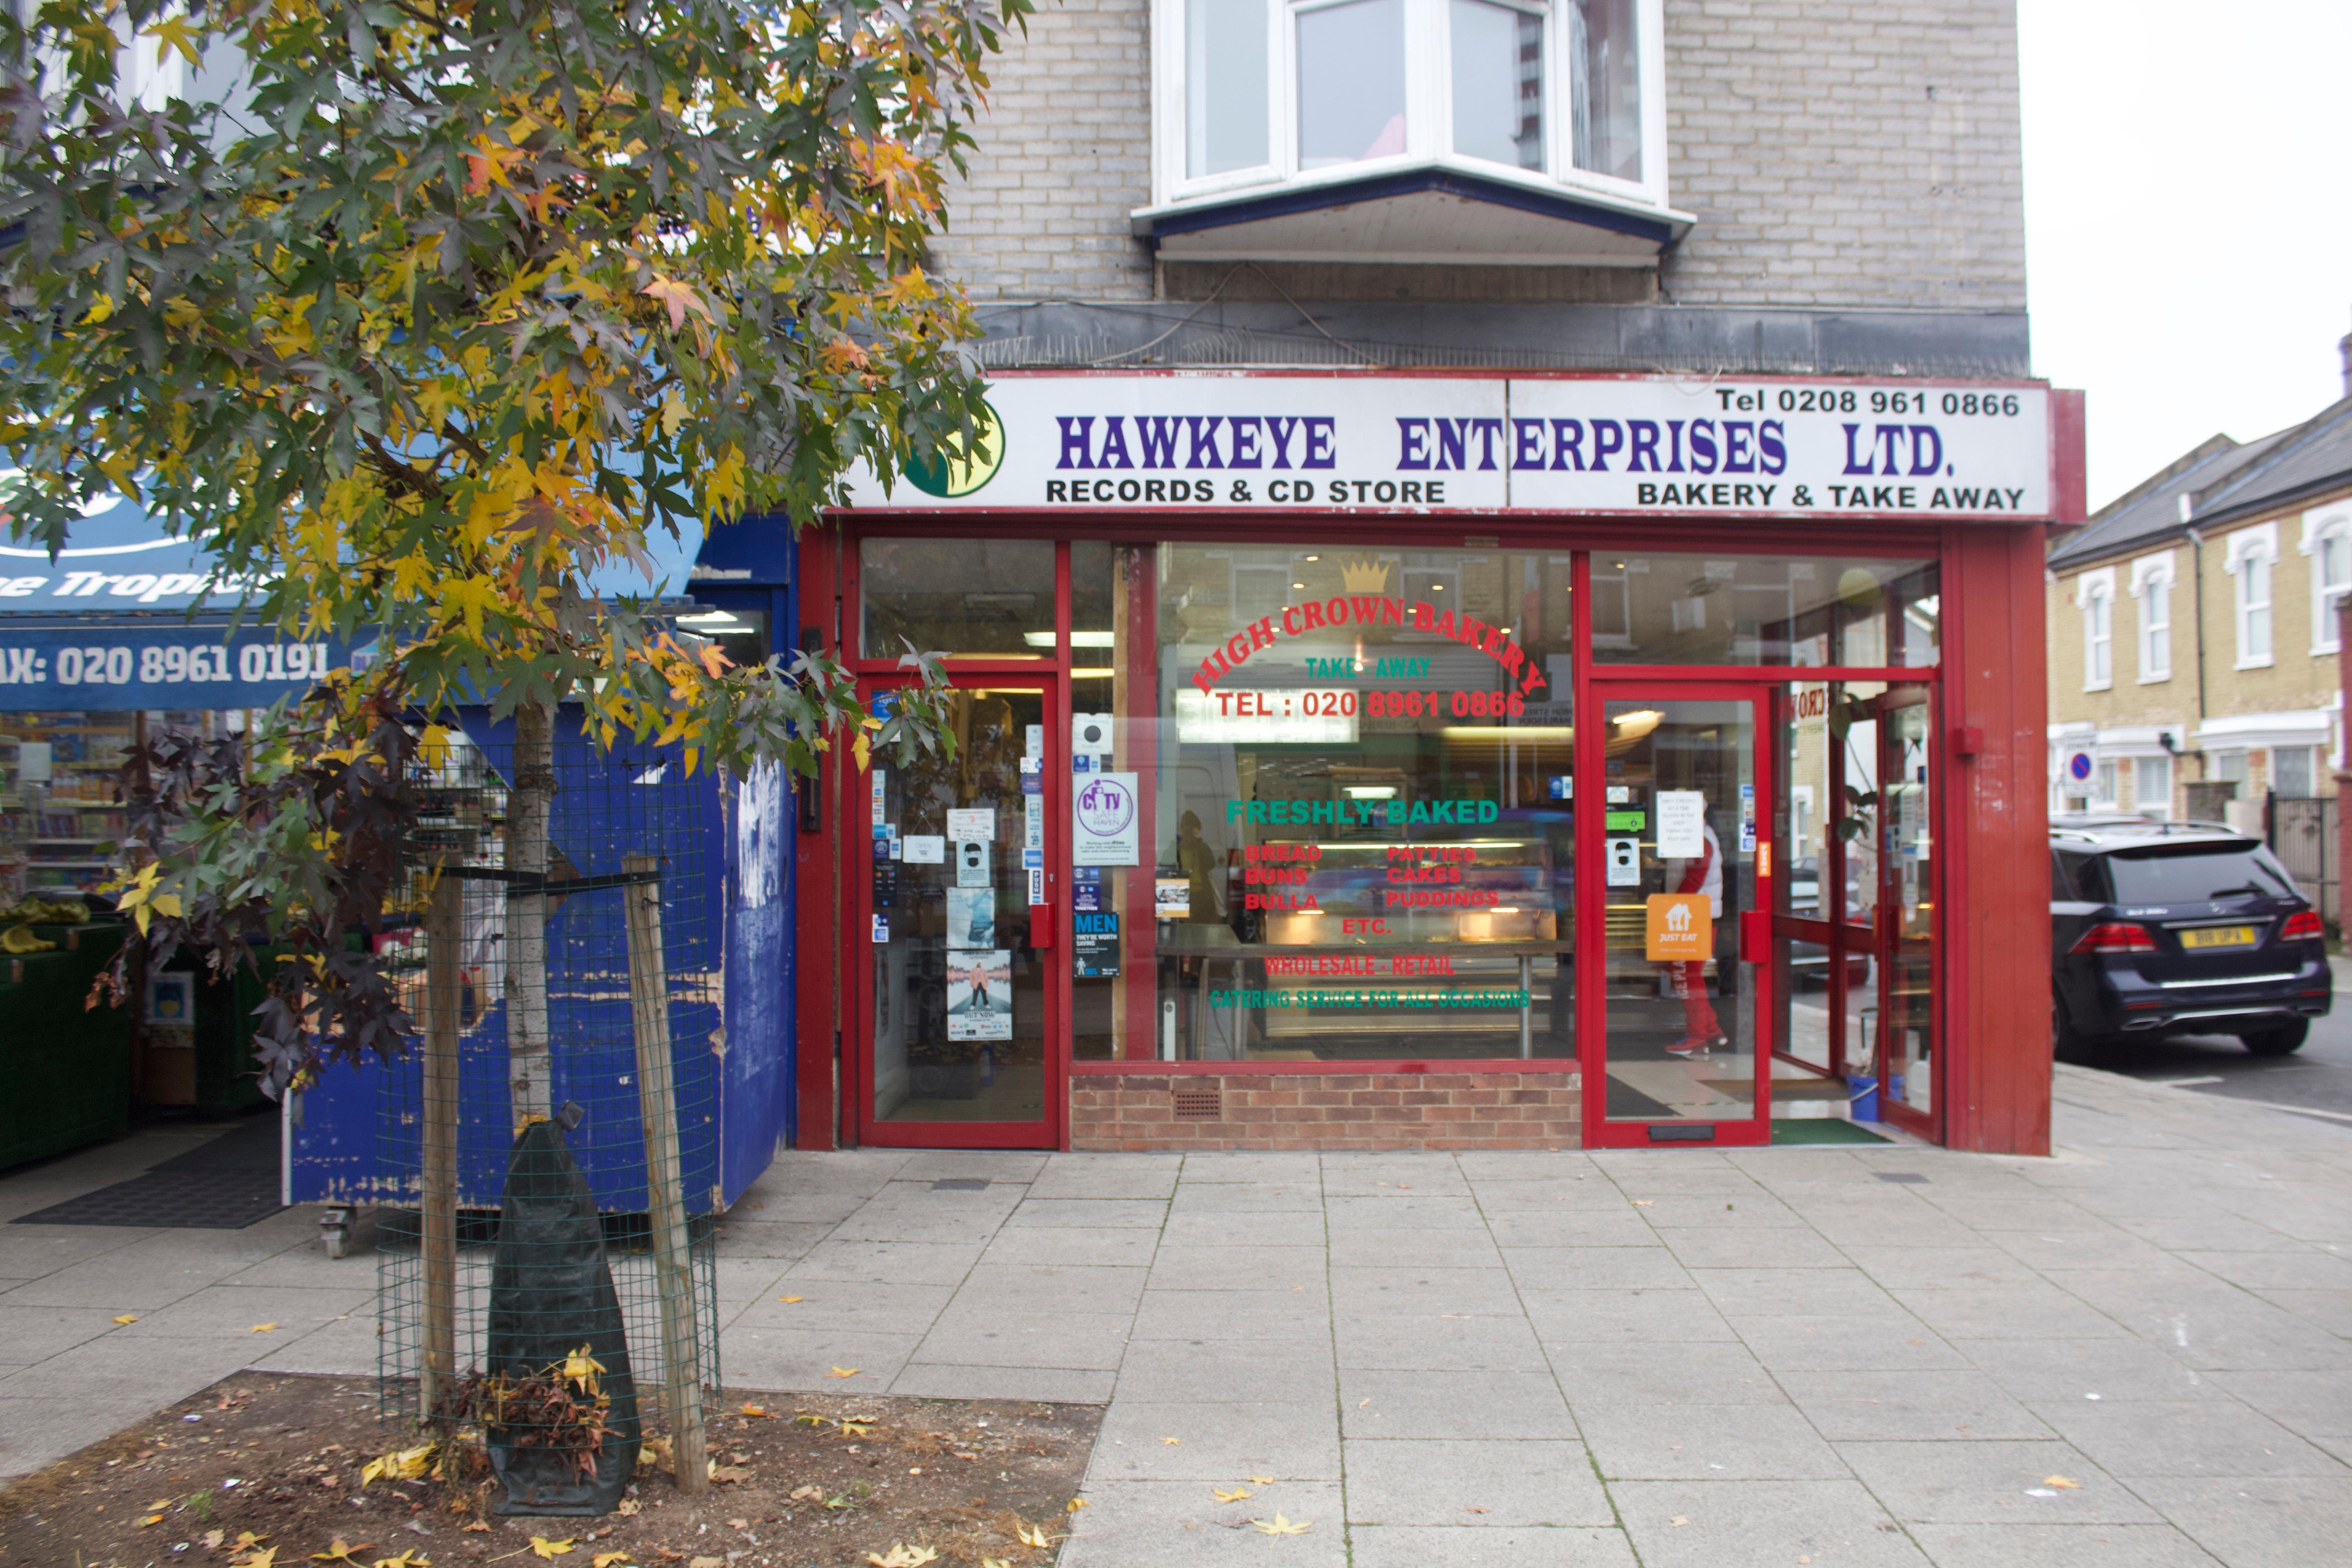 Shop front for Hawkeye Enterprises. The sign reads, ‘Hawkeye Enterprises Ltd: Records & CD Store; Bakery & Take away’.